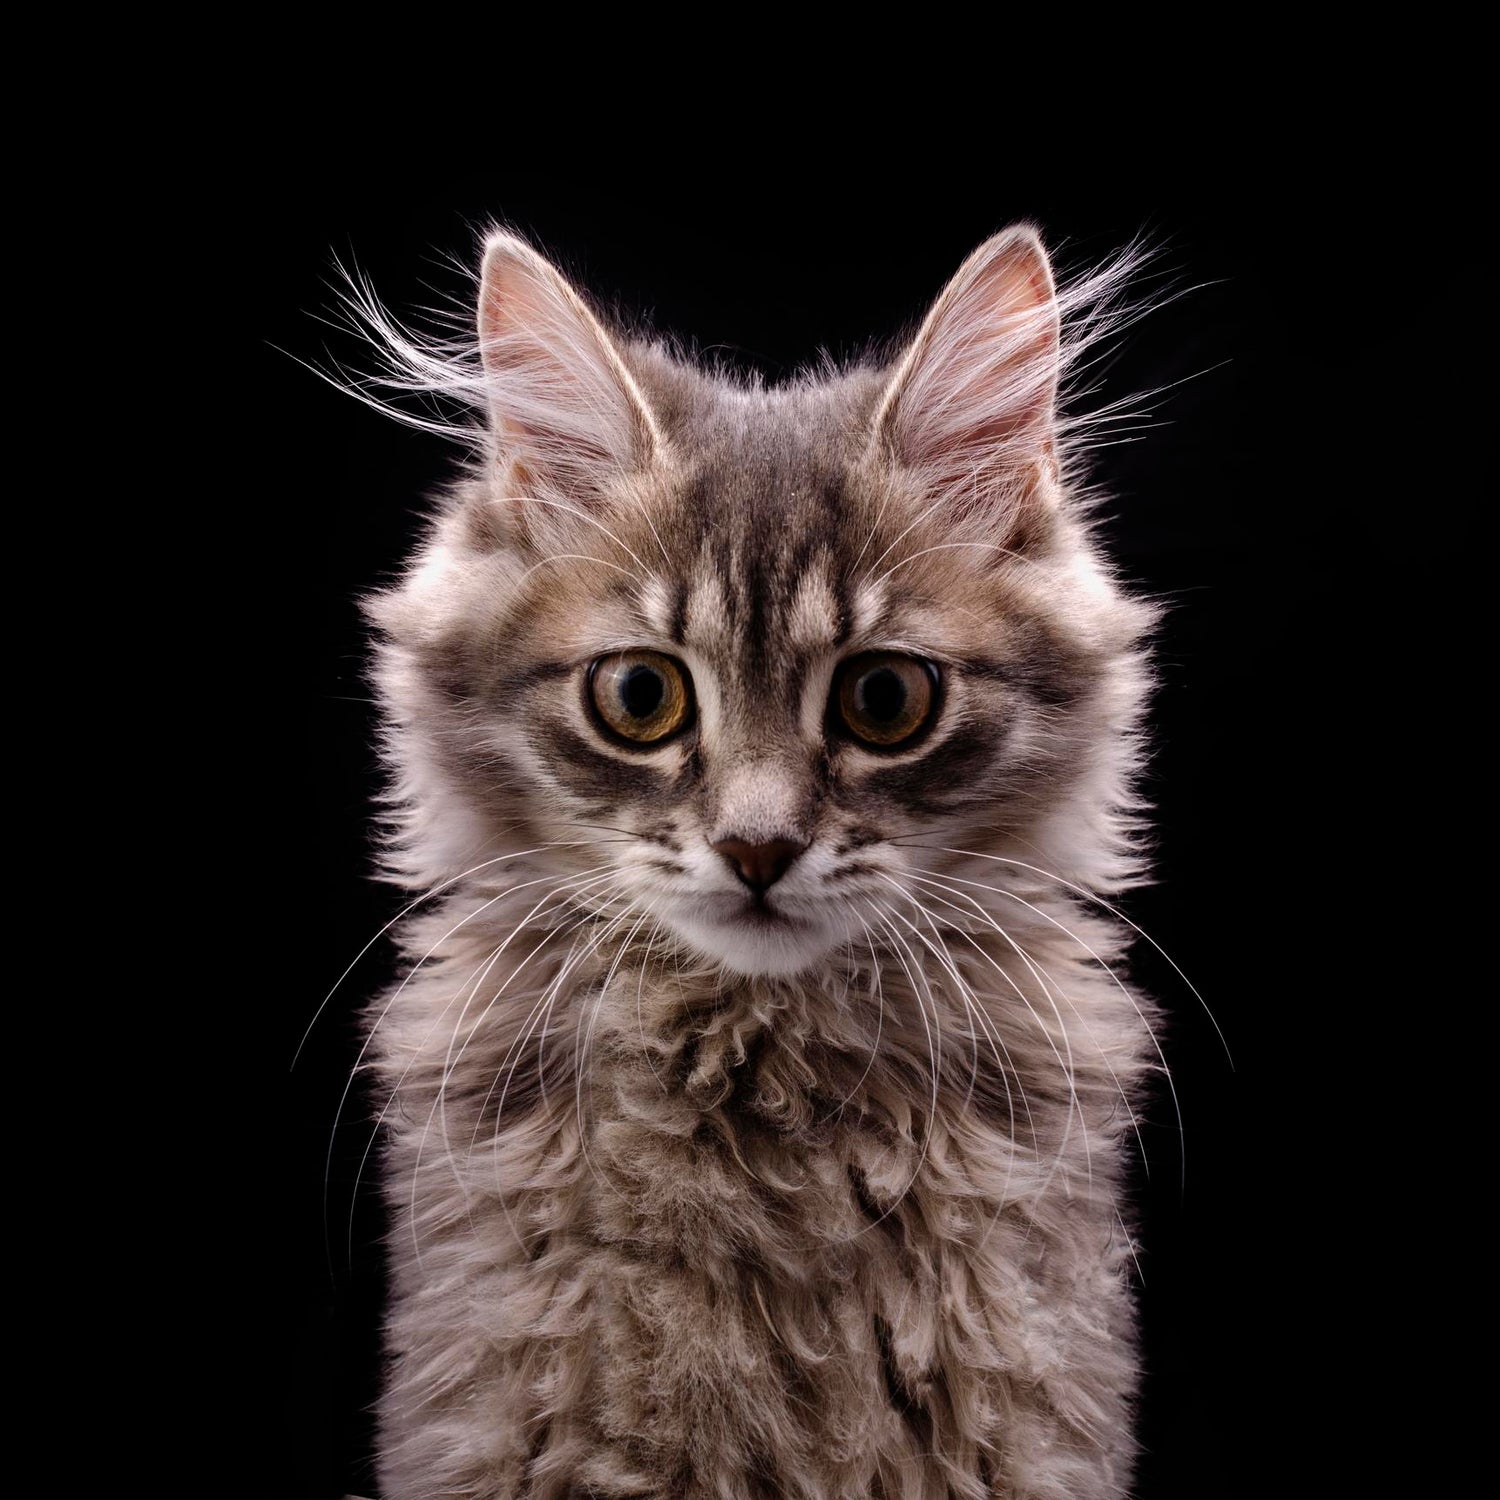 The Catnip High: Exploring the Amusing Behaviors of Cats